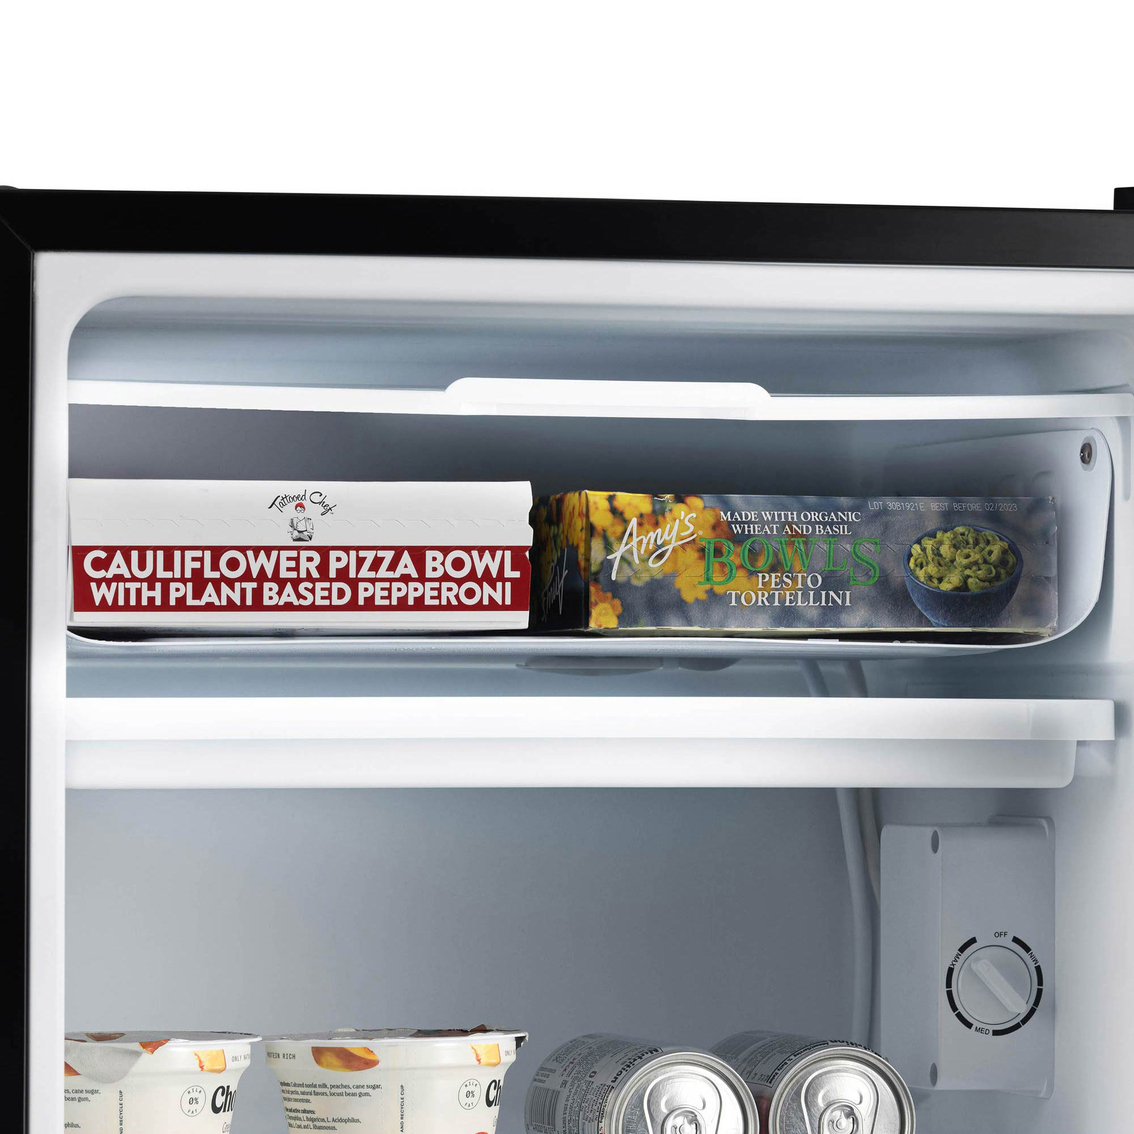 New Air Llc 3.3 Cu. Ft. Compact Mini Refrigerator With Freezer